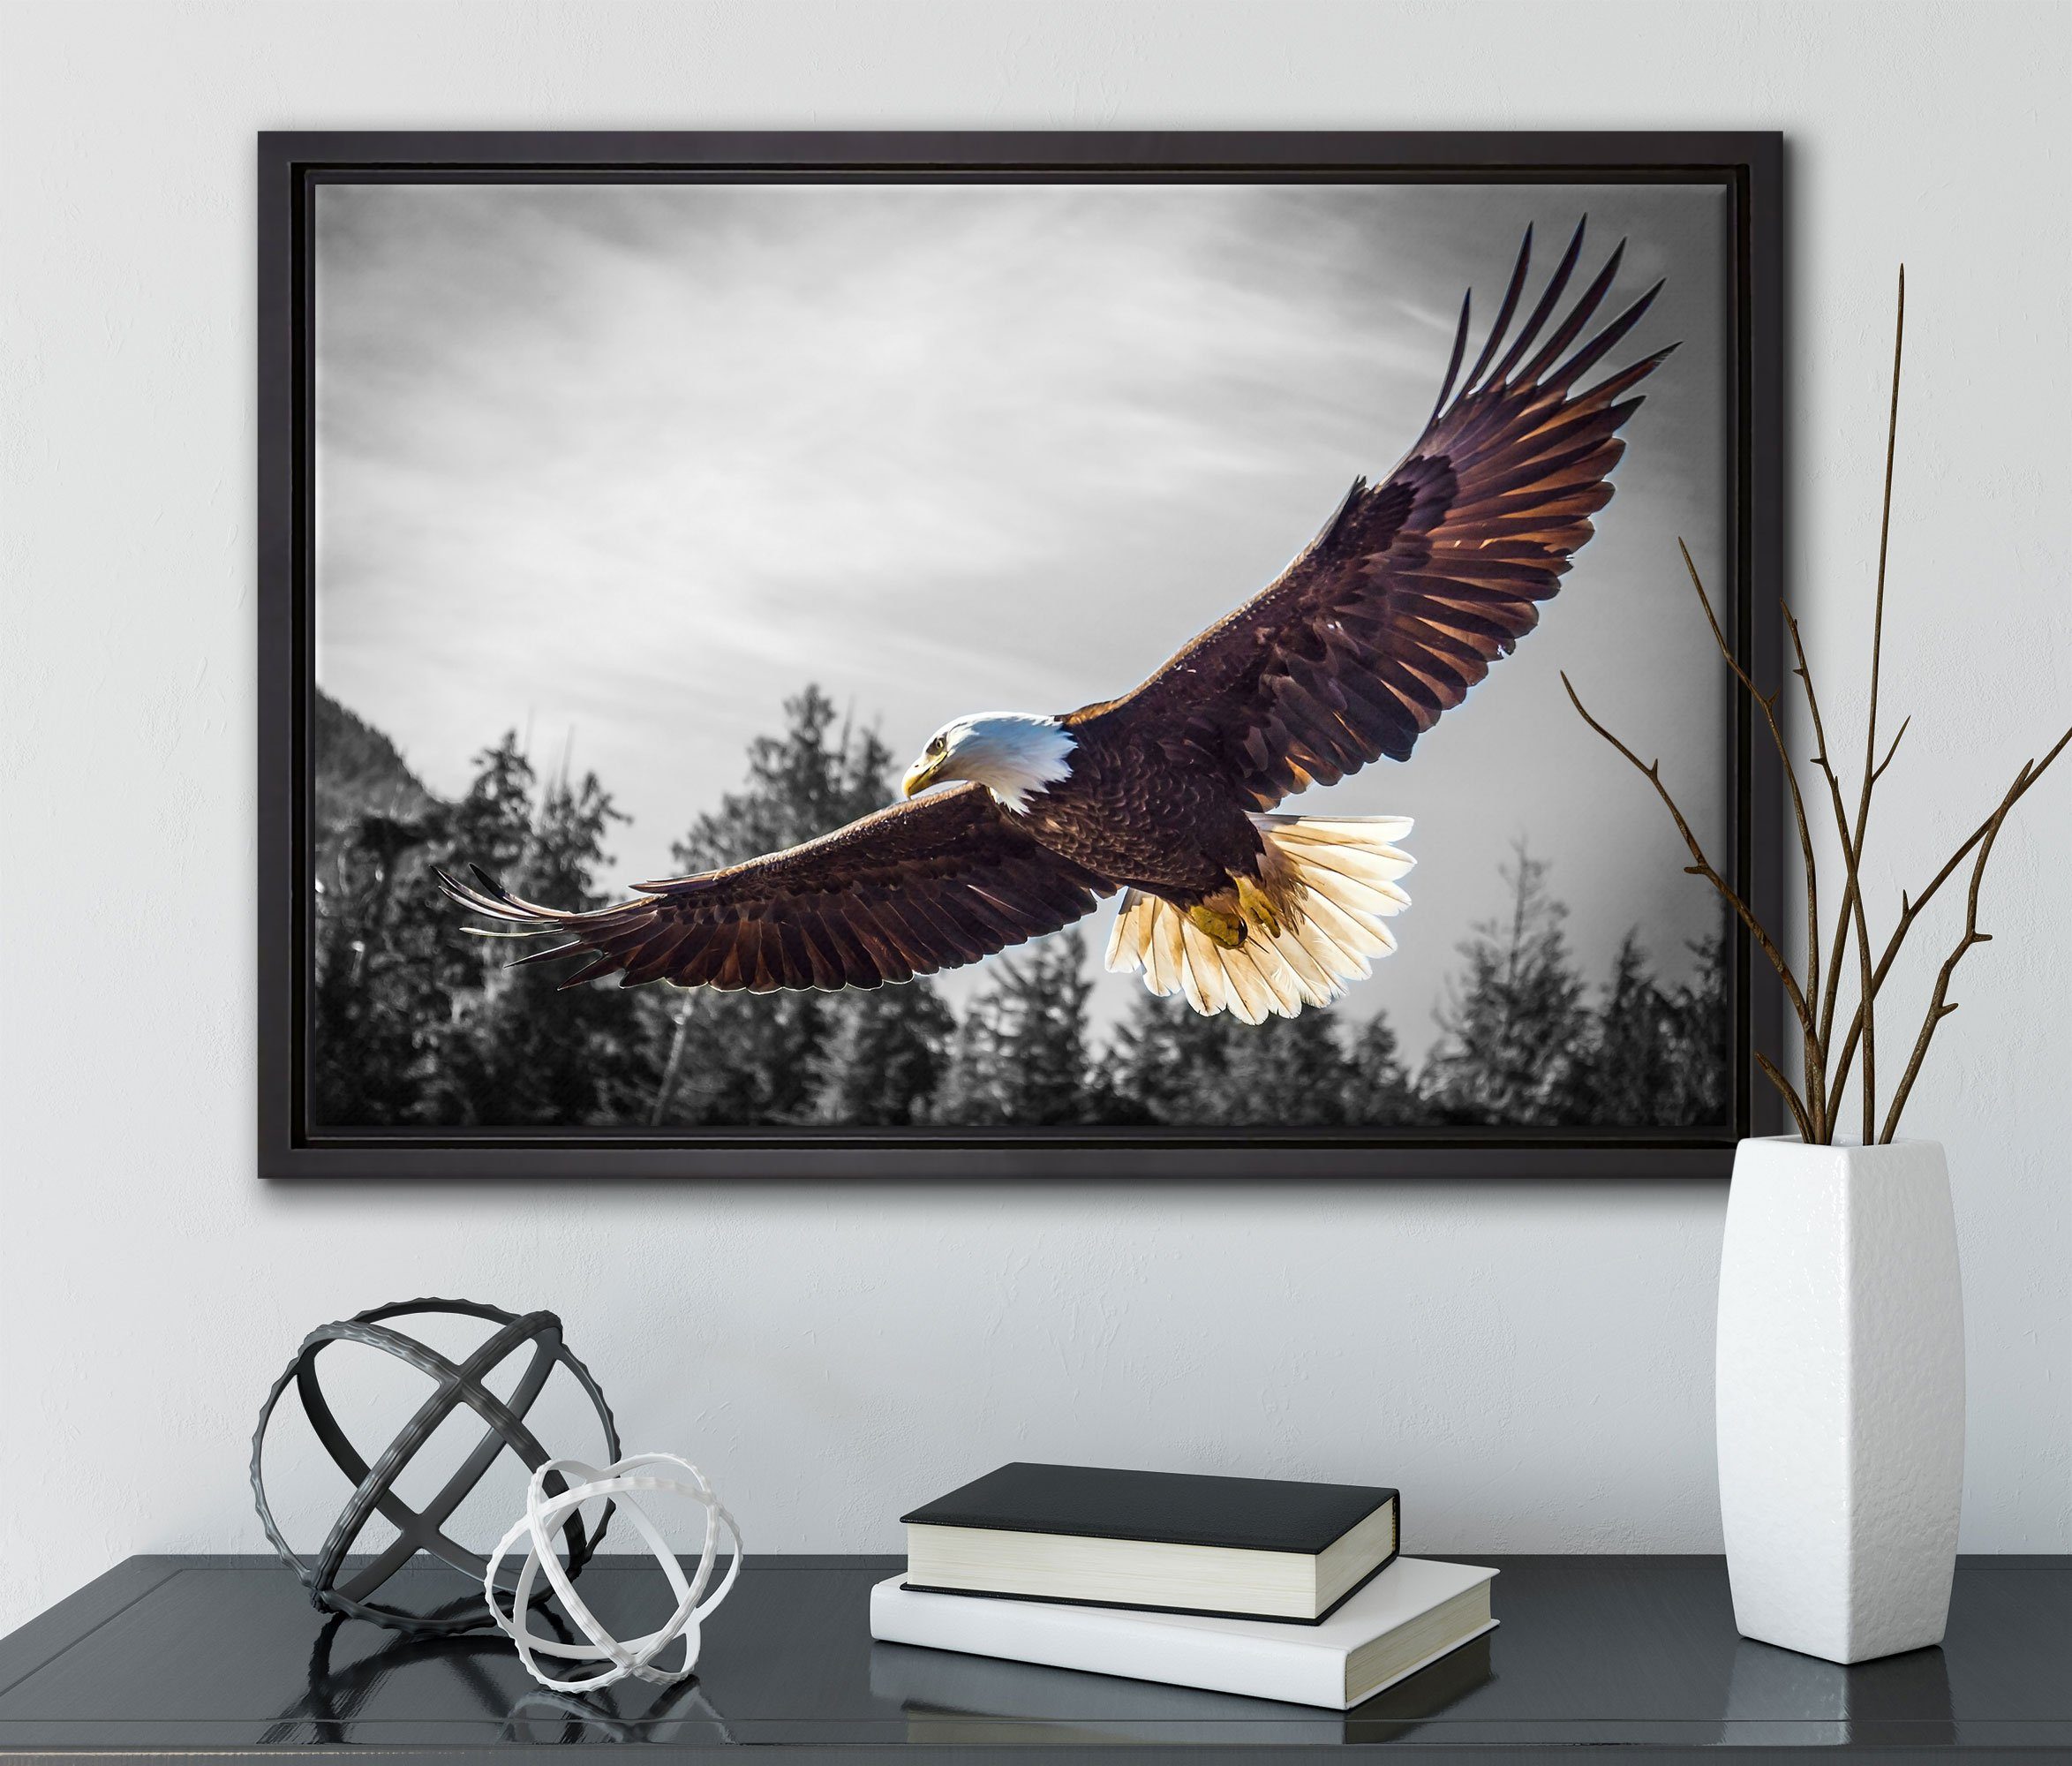 Pixxprint Zackenaufhänger einem Schattenfugen-Bilderrahmen in fliegender inkl. bespannt, Leinwandbild gefasst, Wanddekoration St), (1 Leinwandbild großer Adler, fertig